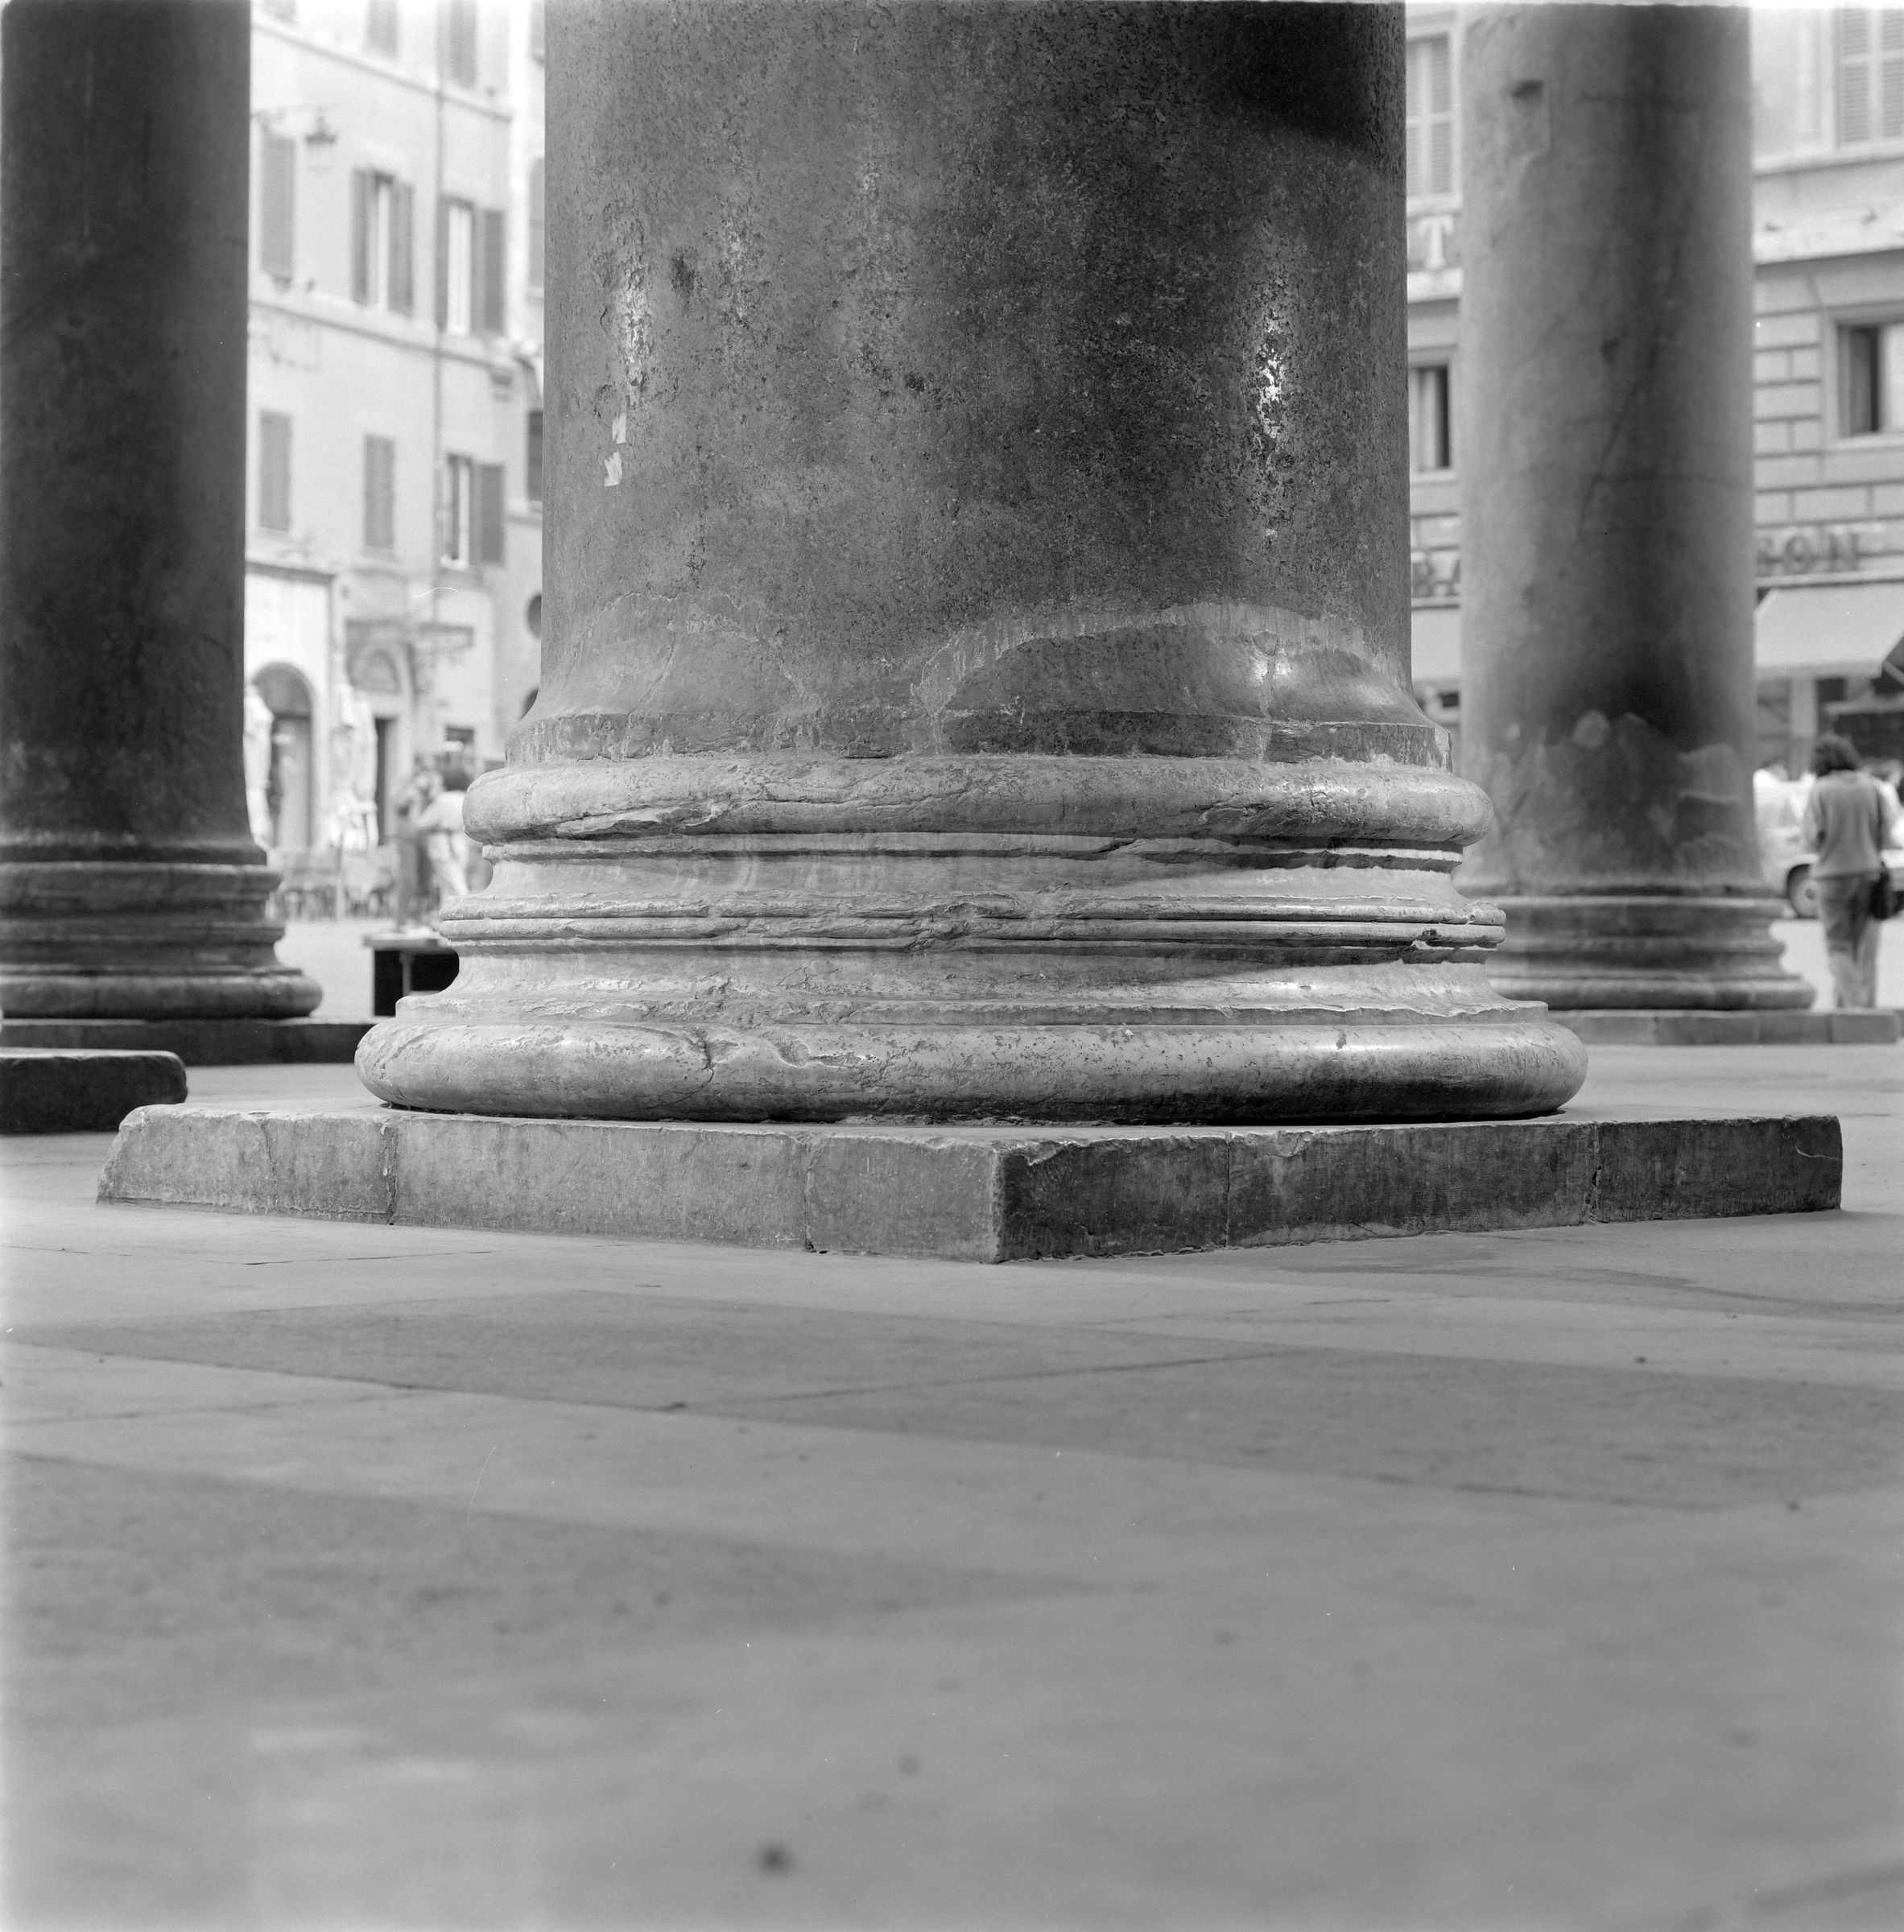 Fotografo non identificato, Pantheon,1951-2000, gelatina ai sali d'argento, 6x6 cm, N077965